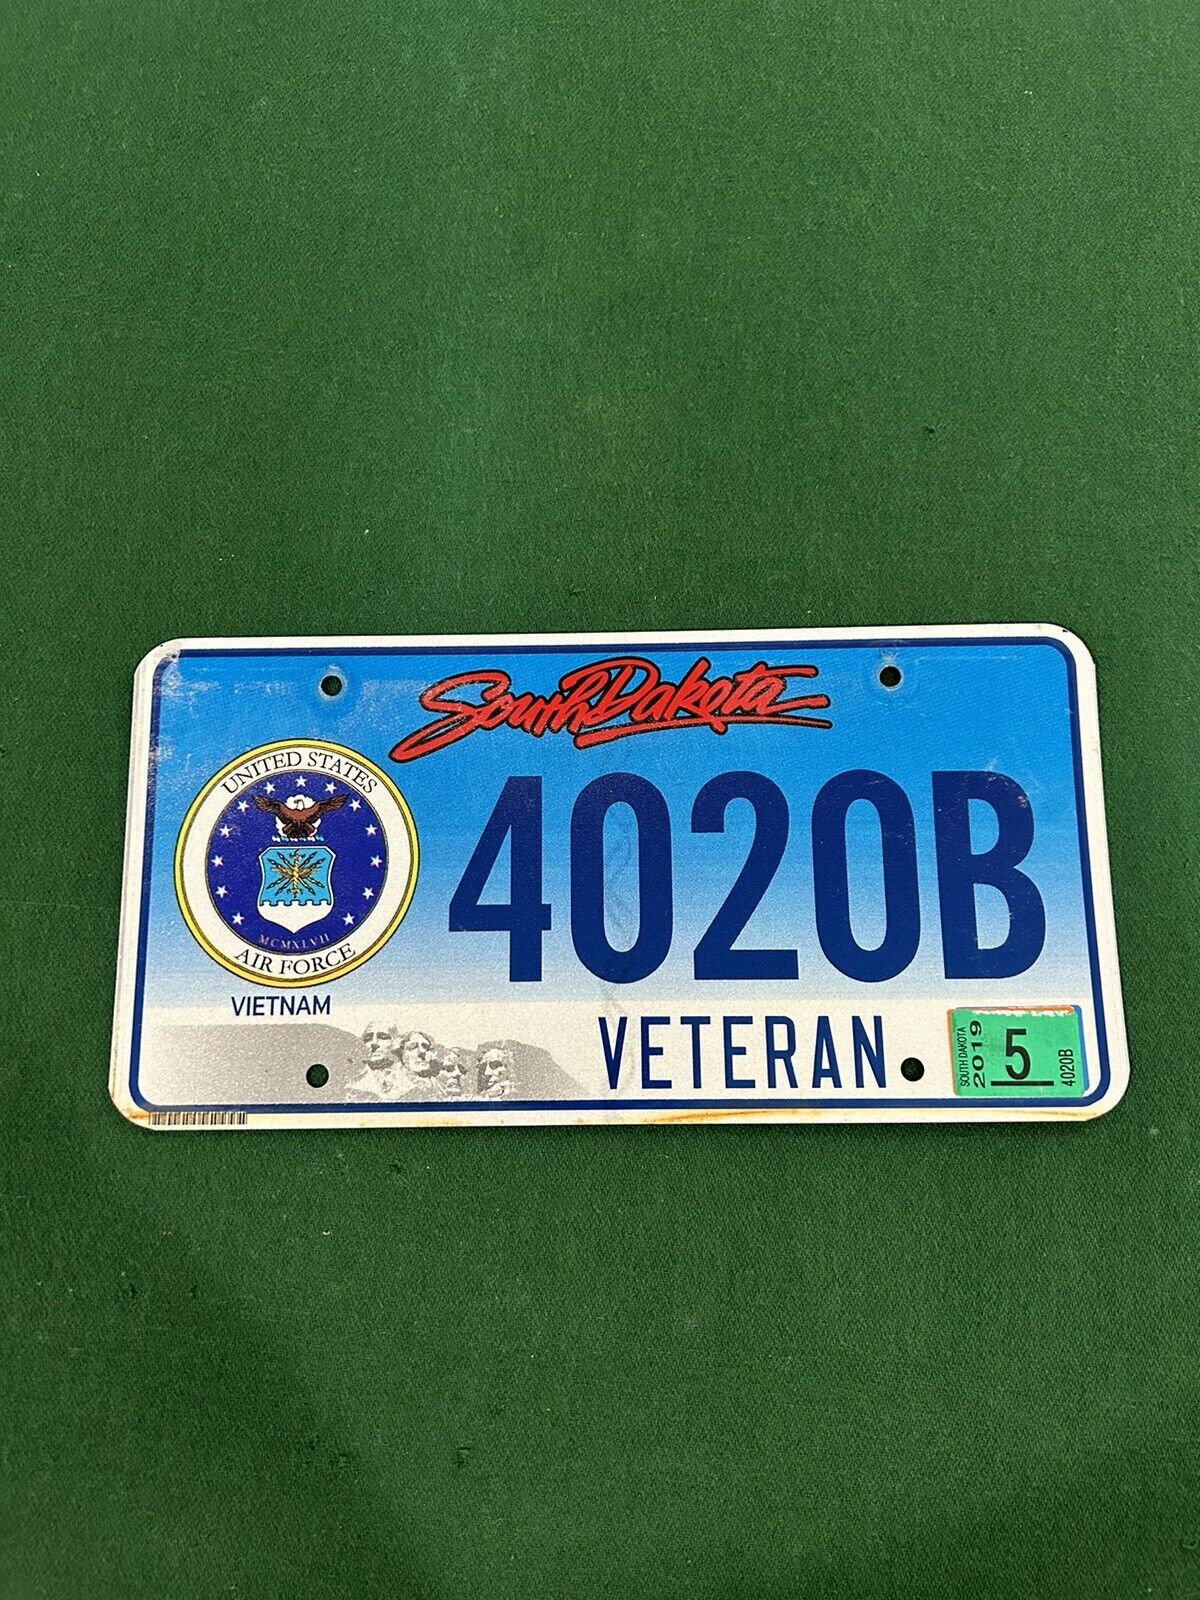 SOUTH DAKOTA U.S. AIR FORCE VIETNAM Veteran Vet License Plate. Used.